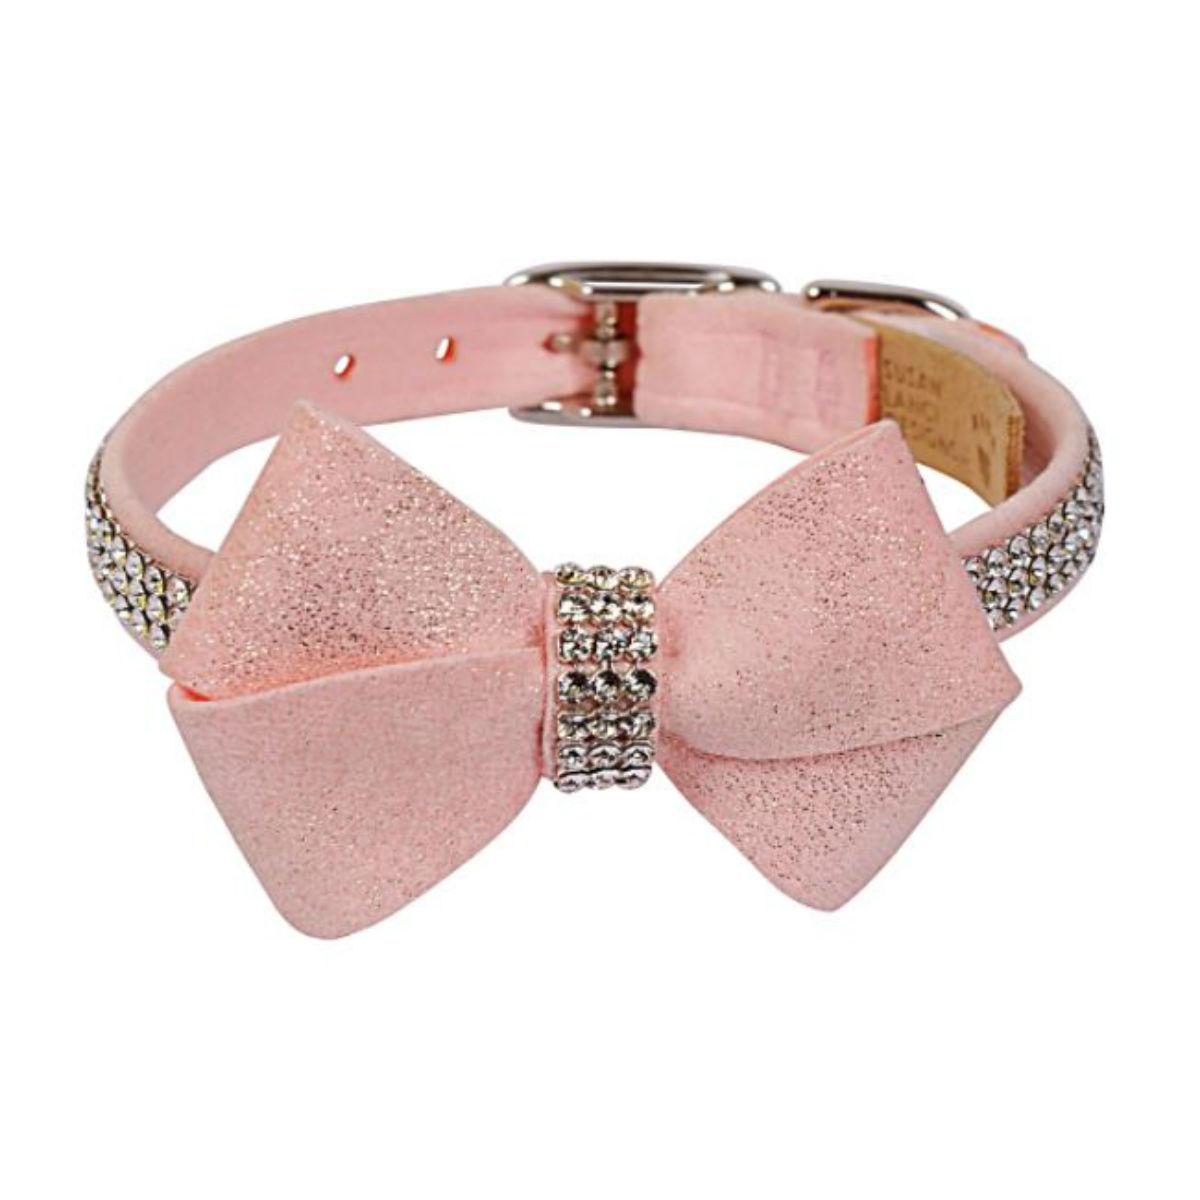 Susan Lanci Glizerati Nouveau Bow 3 Row Giltmore Dog Collar - Puppy Pink